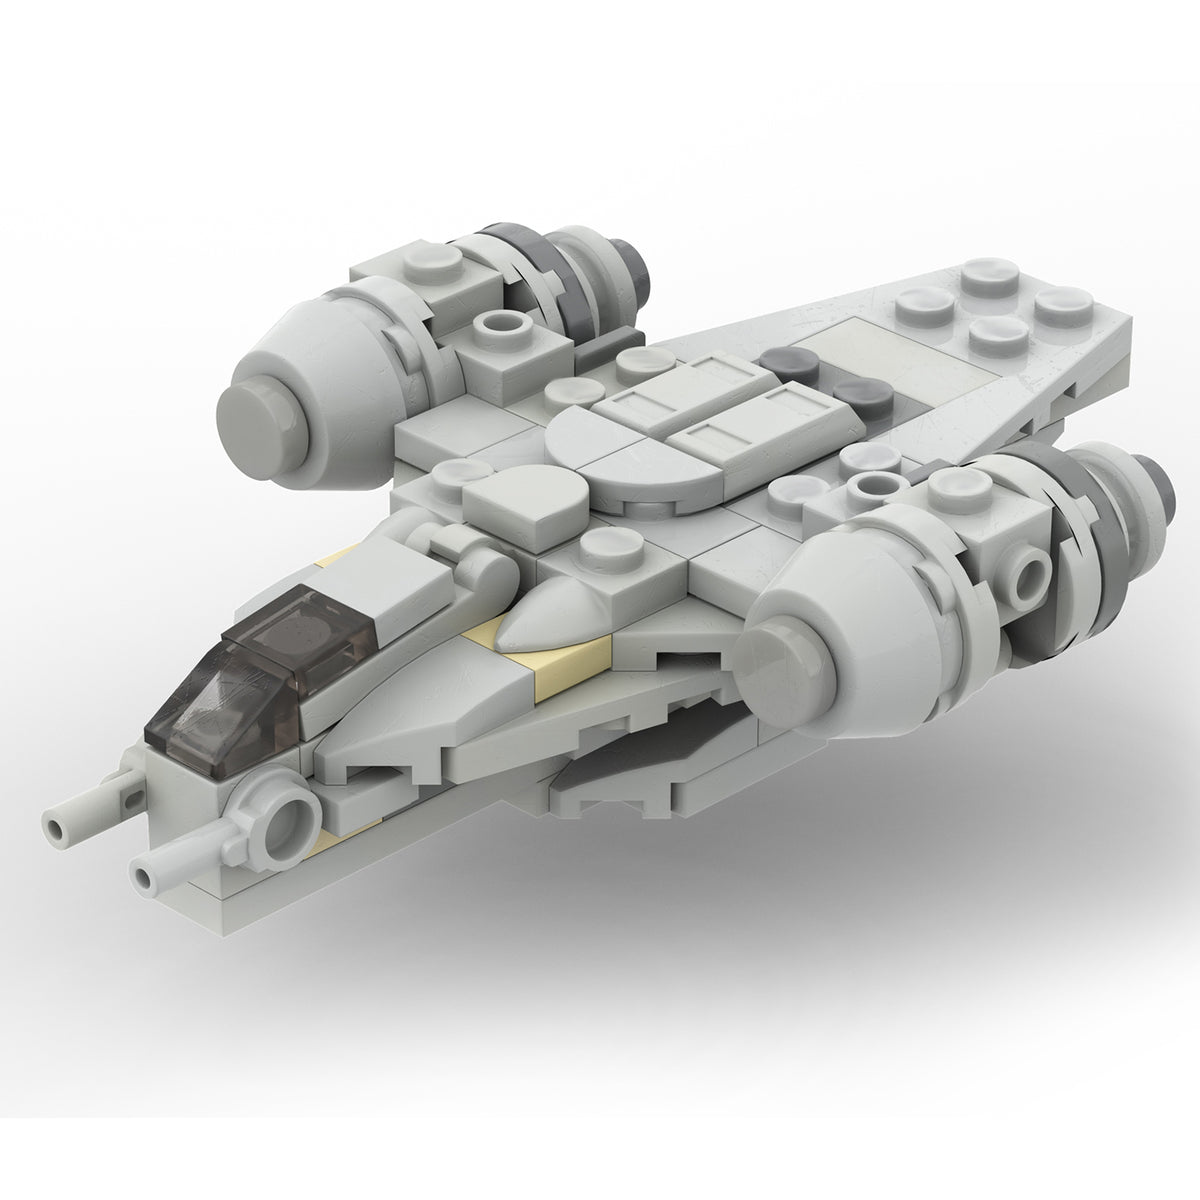 MOC-38715 Micro Razor Crest Spaceship Model